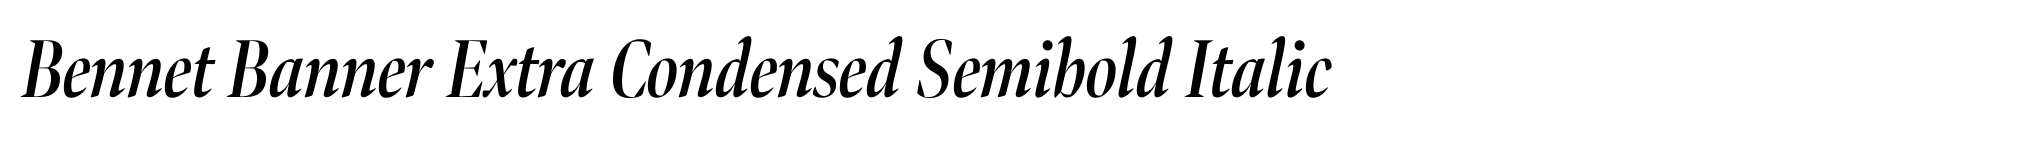 Bennet Banner Extra Condensed Semibold Italic image